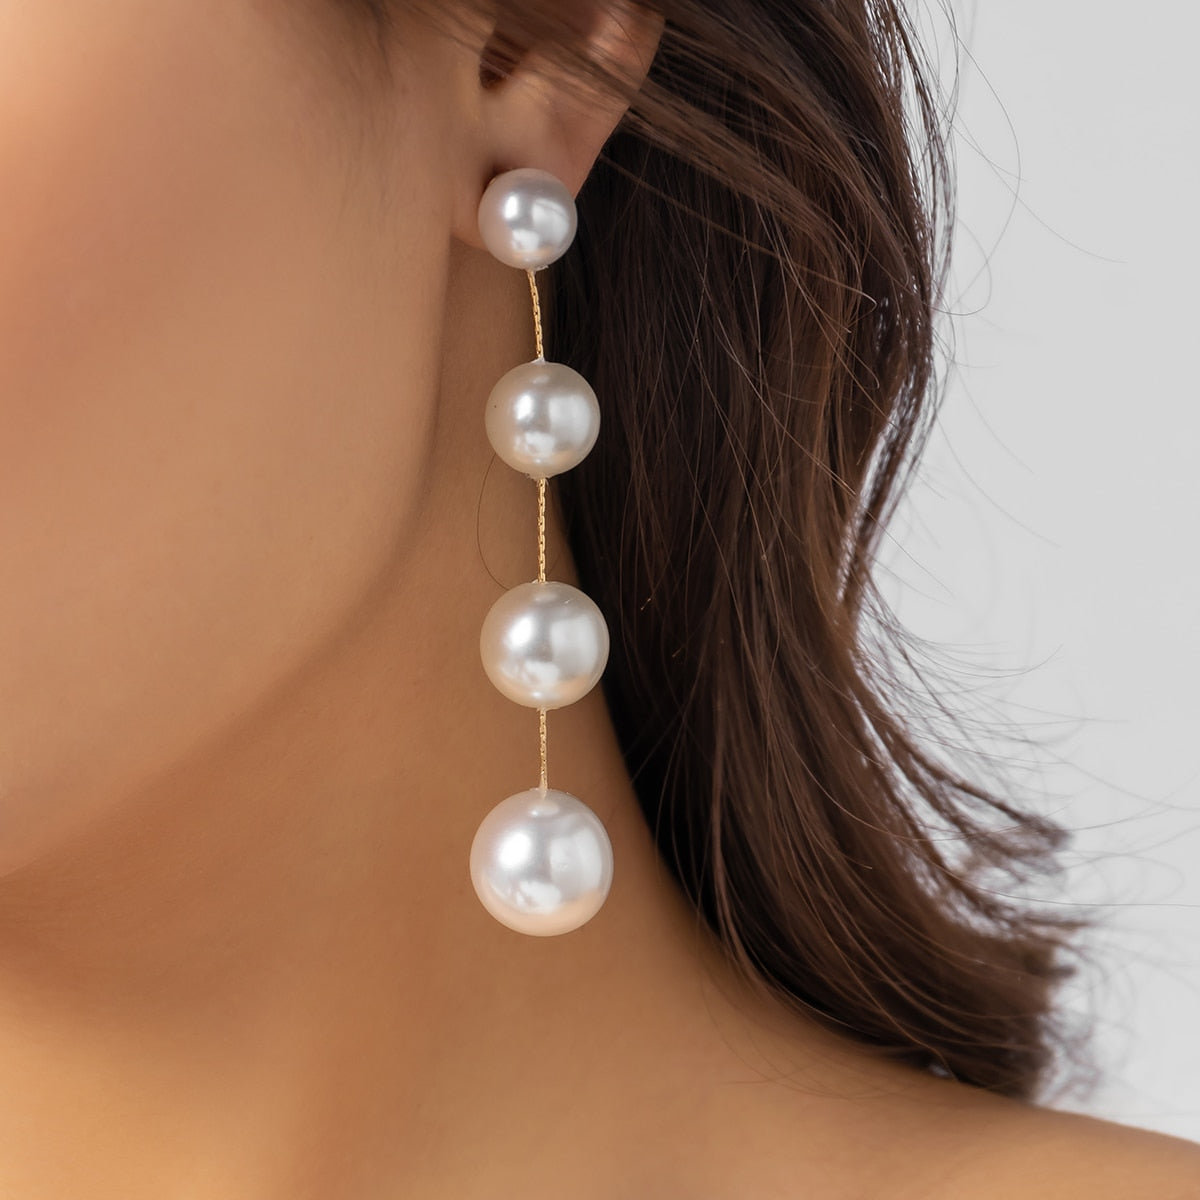 Ingemark Kpop Simulation Pearl Long Tassel Drop Earrings for Women Wedding Bridal Vintage Bead Dangle Earrings Jewelry Gift